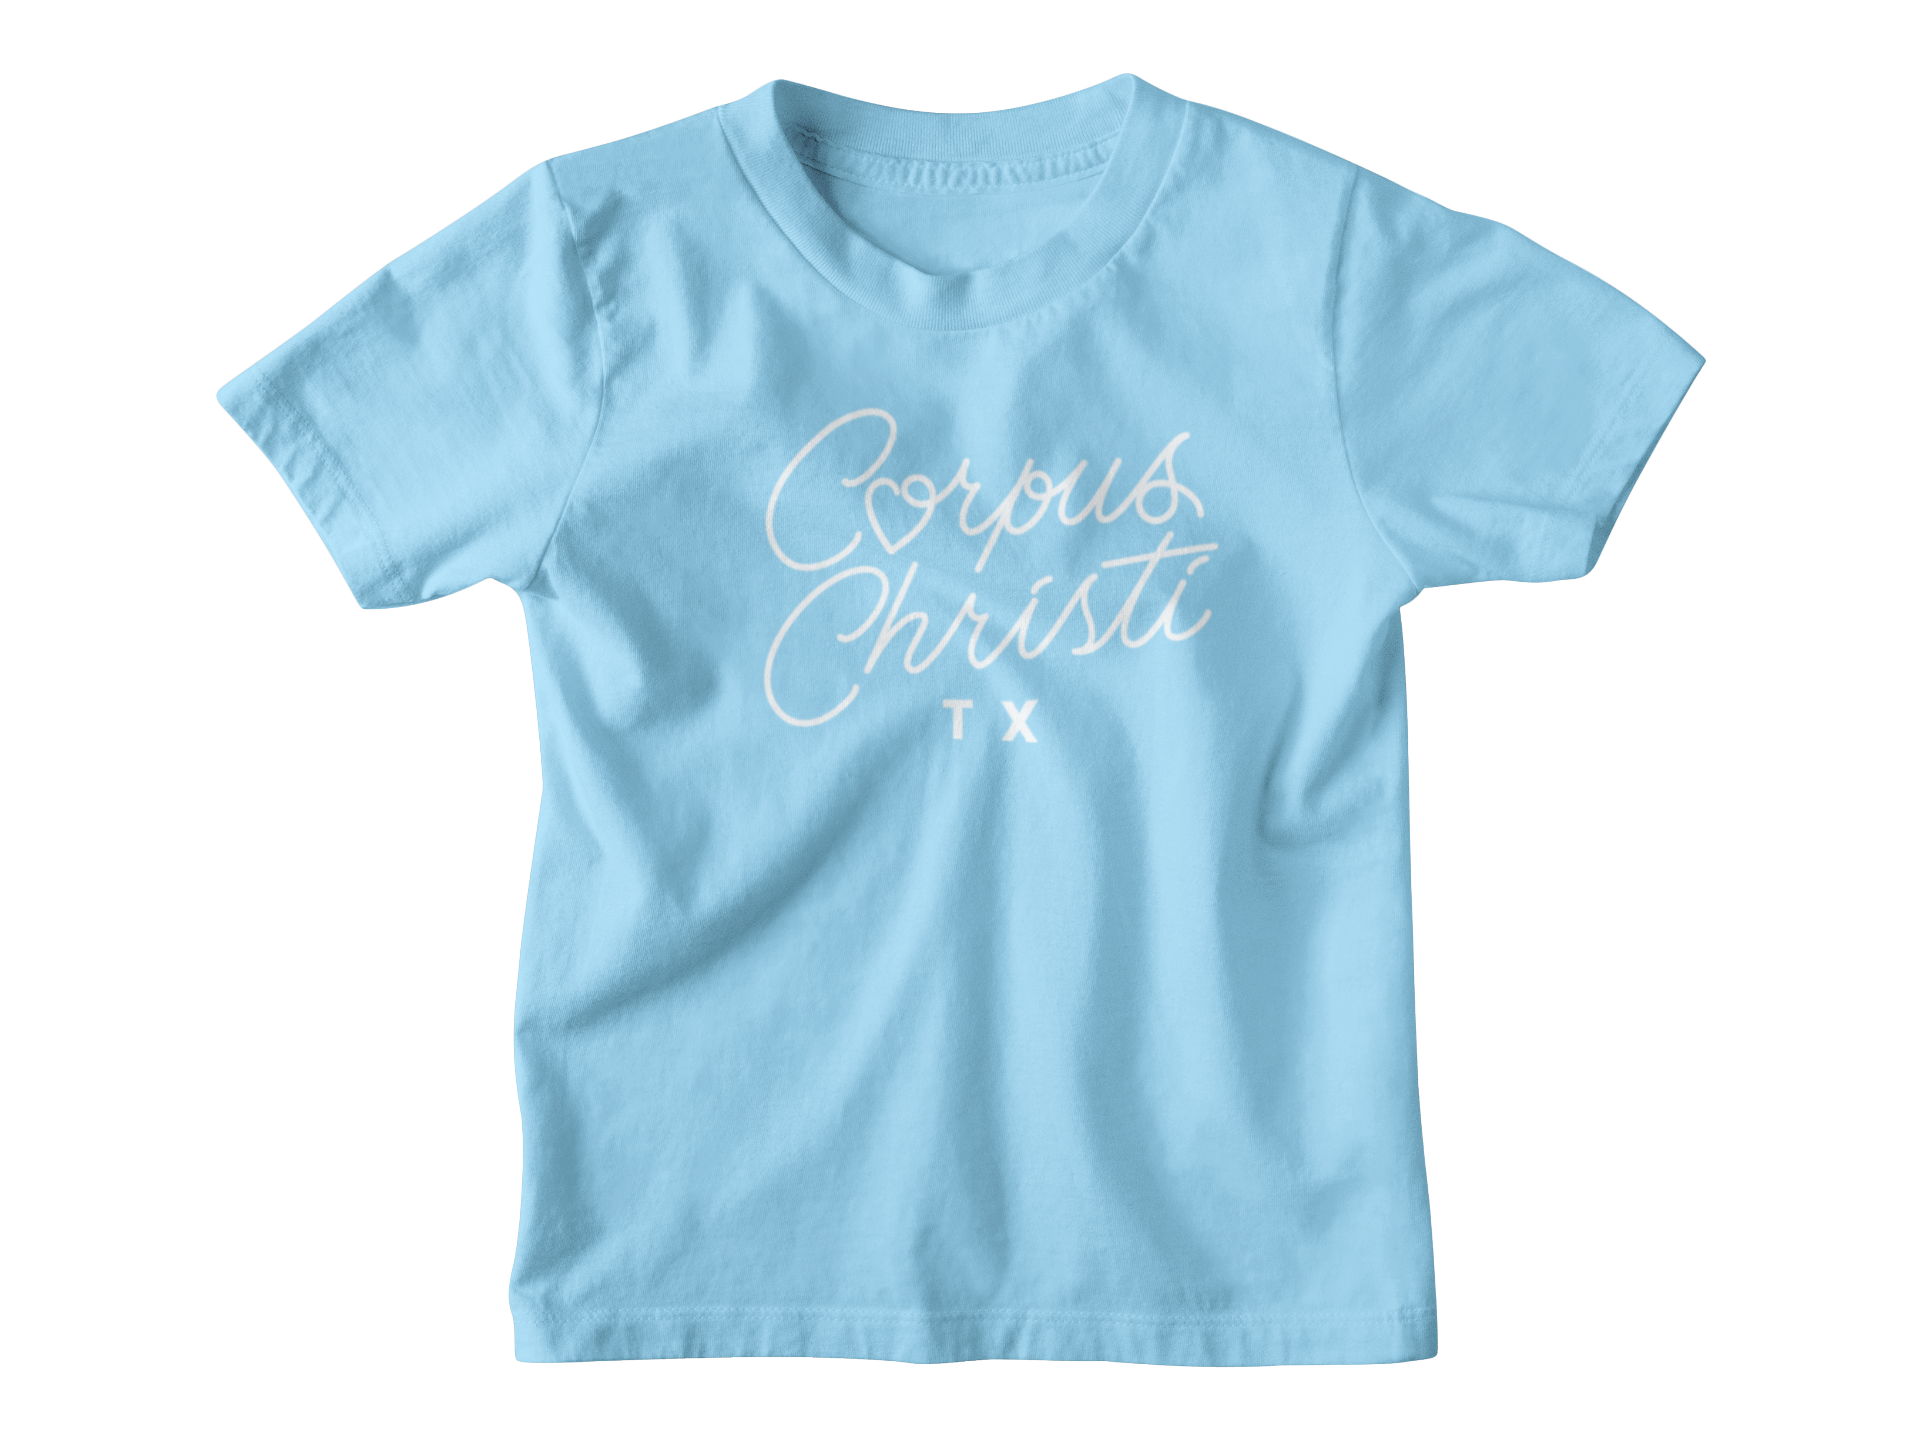 Corpus Christi Heart Youth T-Shirts